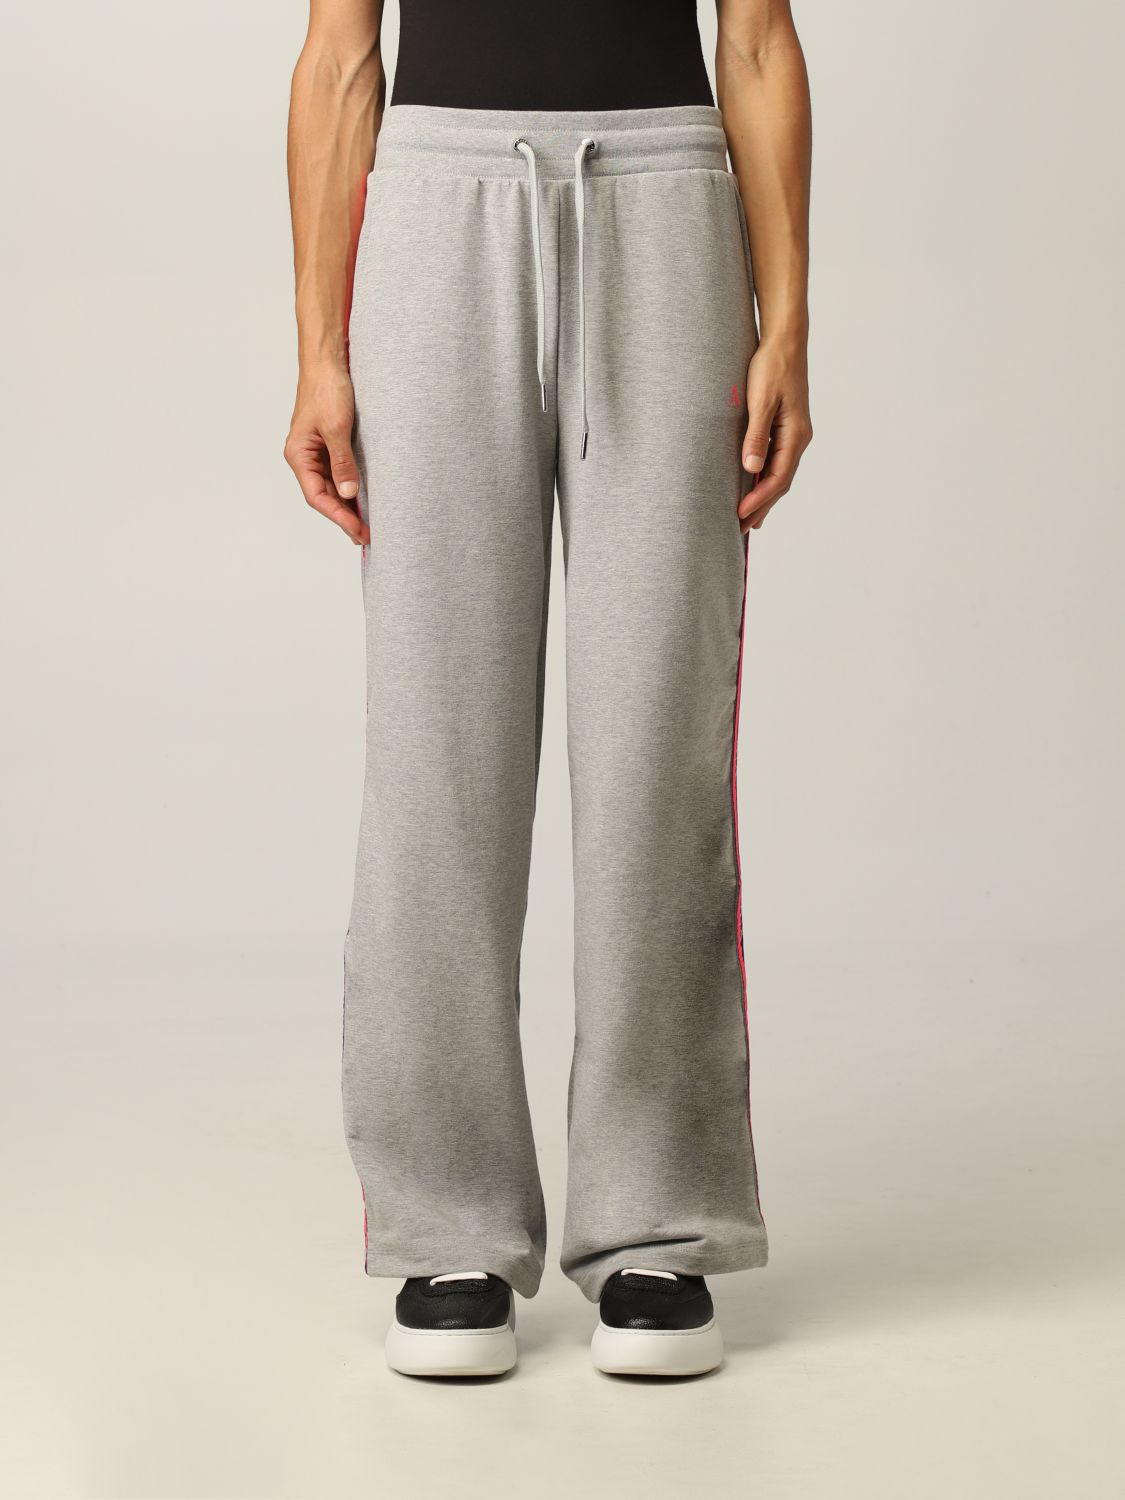 Armani Exchange cotton jogging pants with logo-tape